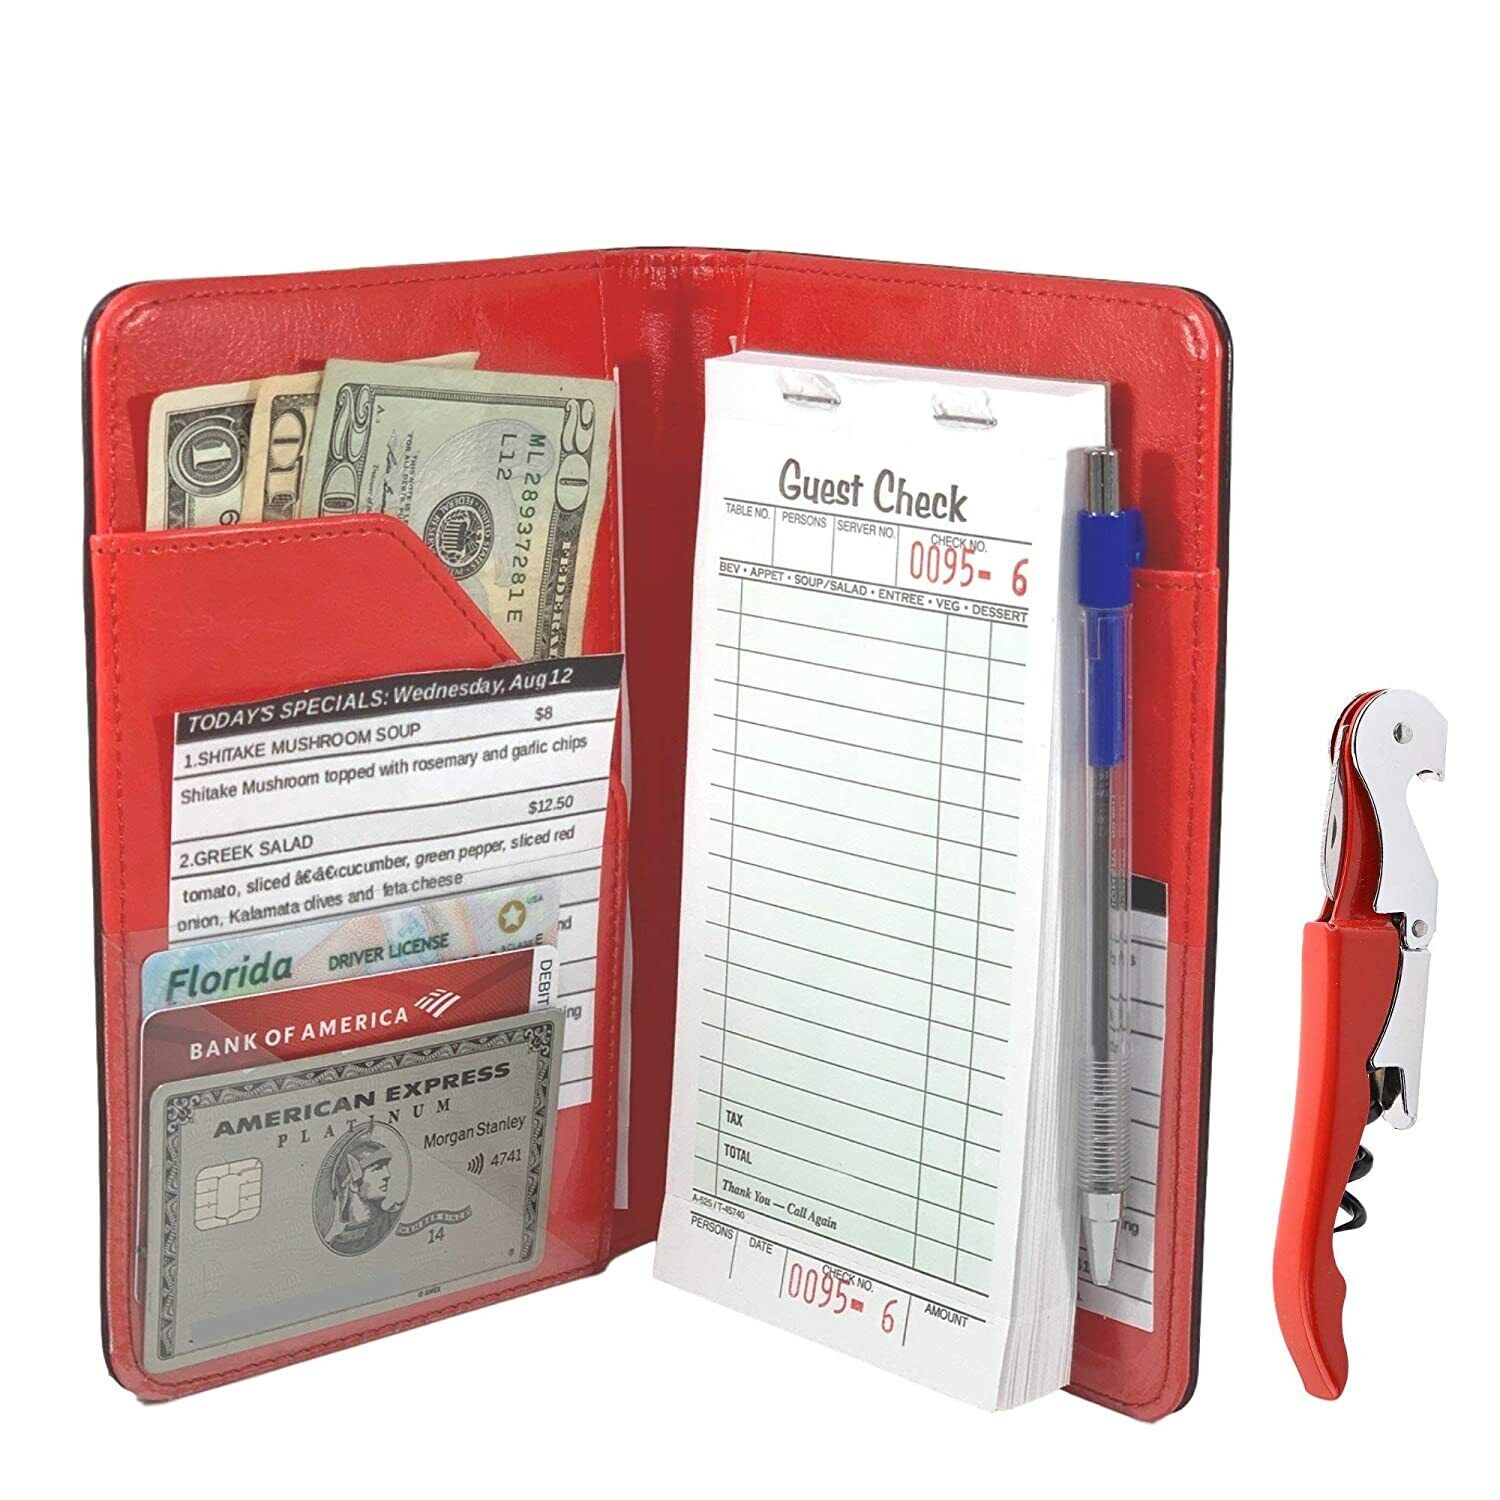 Server Book Waitress Wallet Organizer – RED 7 Pocket Bundle with WINE OPENER